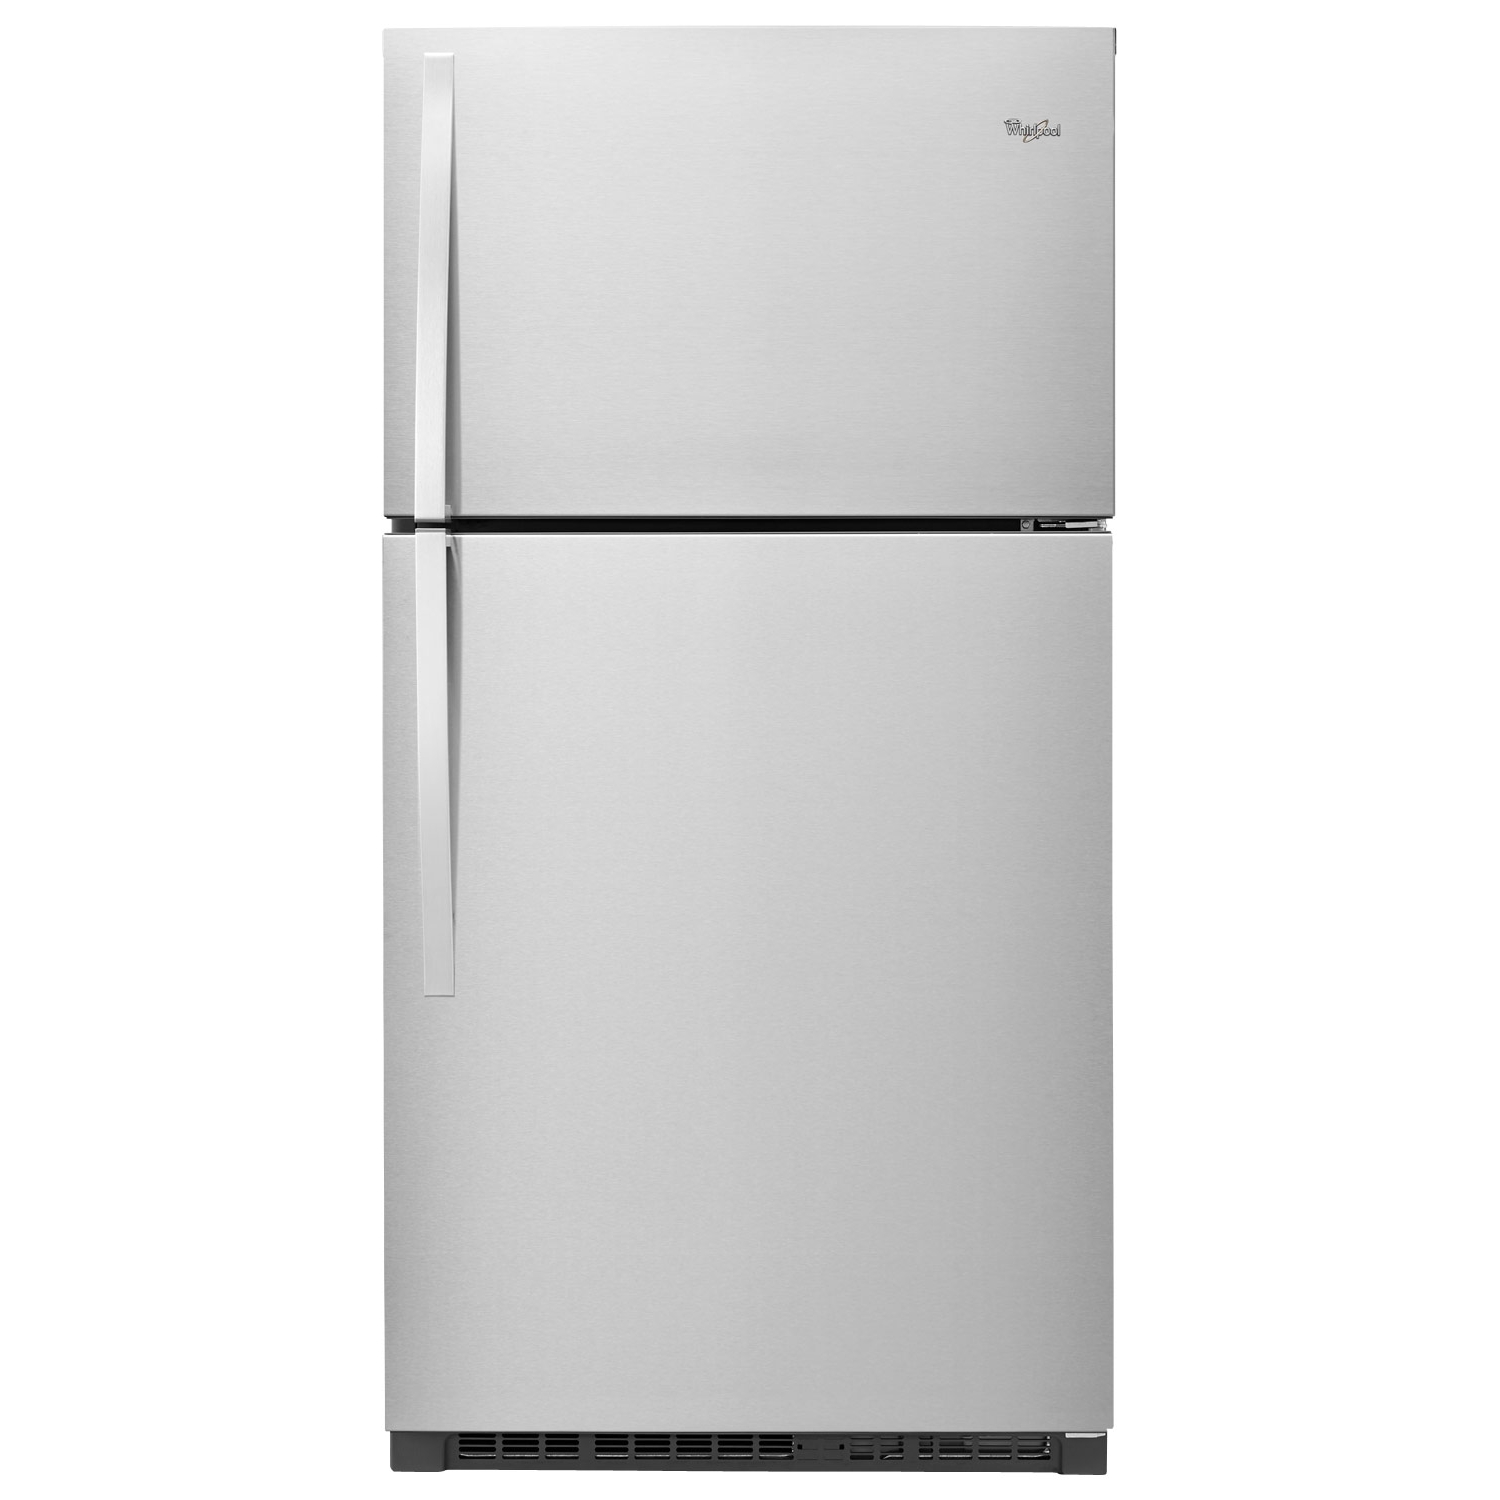 Buy Whirlpool Refrigerator WRT541SZDM